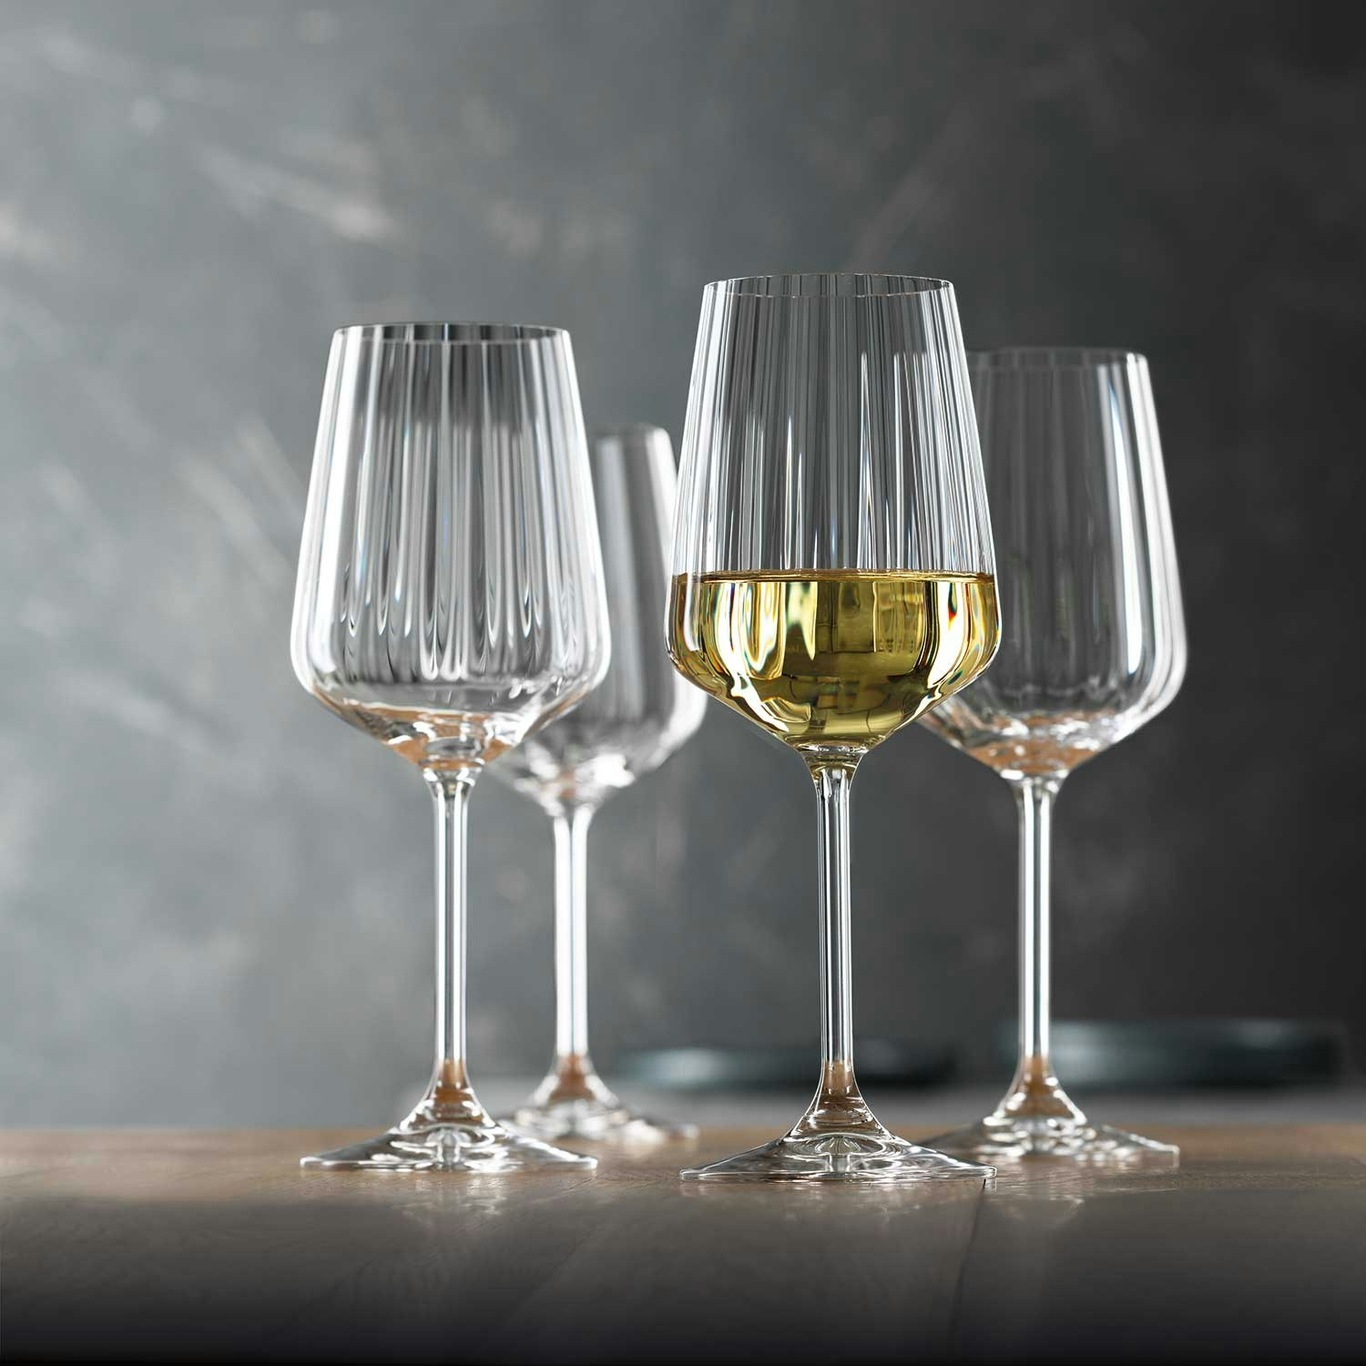 https://royaldesign.com/image/2/spiegelau-lifestyle-white-wine-glass-44-cl-4-pcs-1?w=800&quality=80